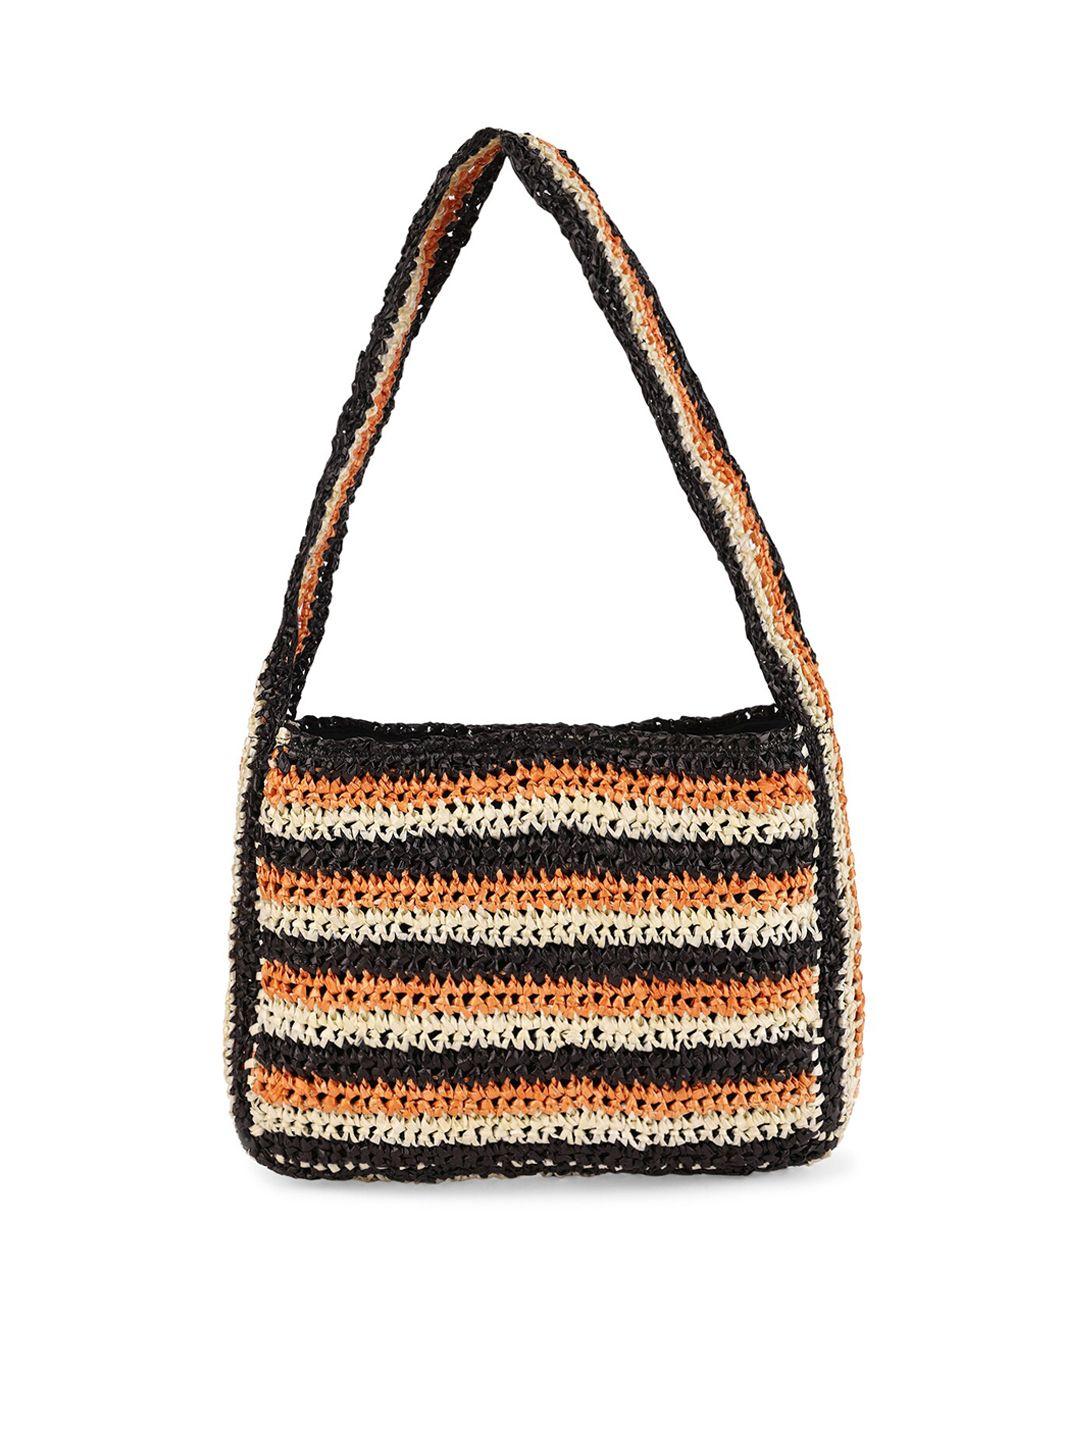 rediscover fashion striped shopper handheld bag